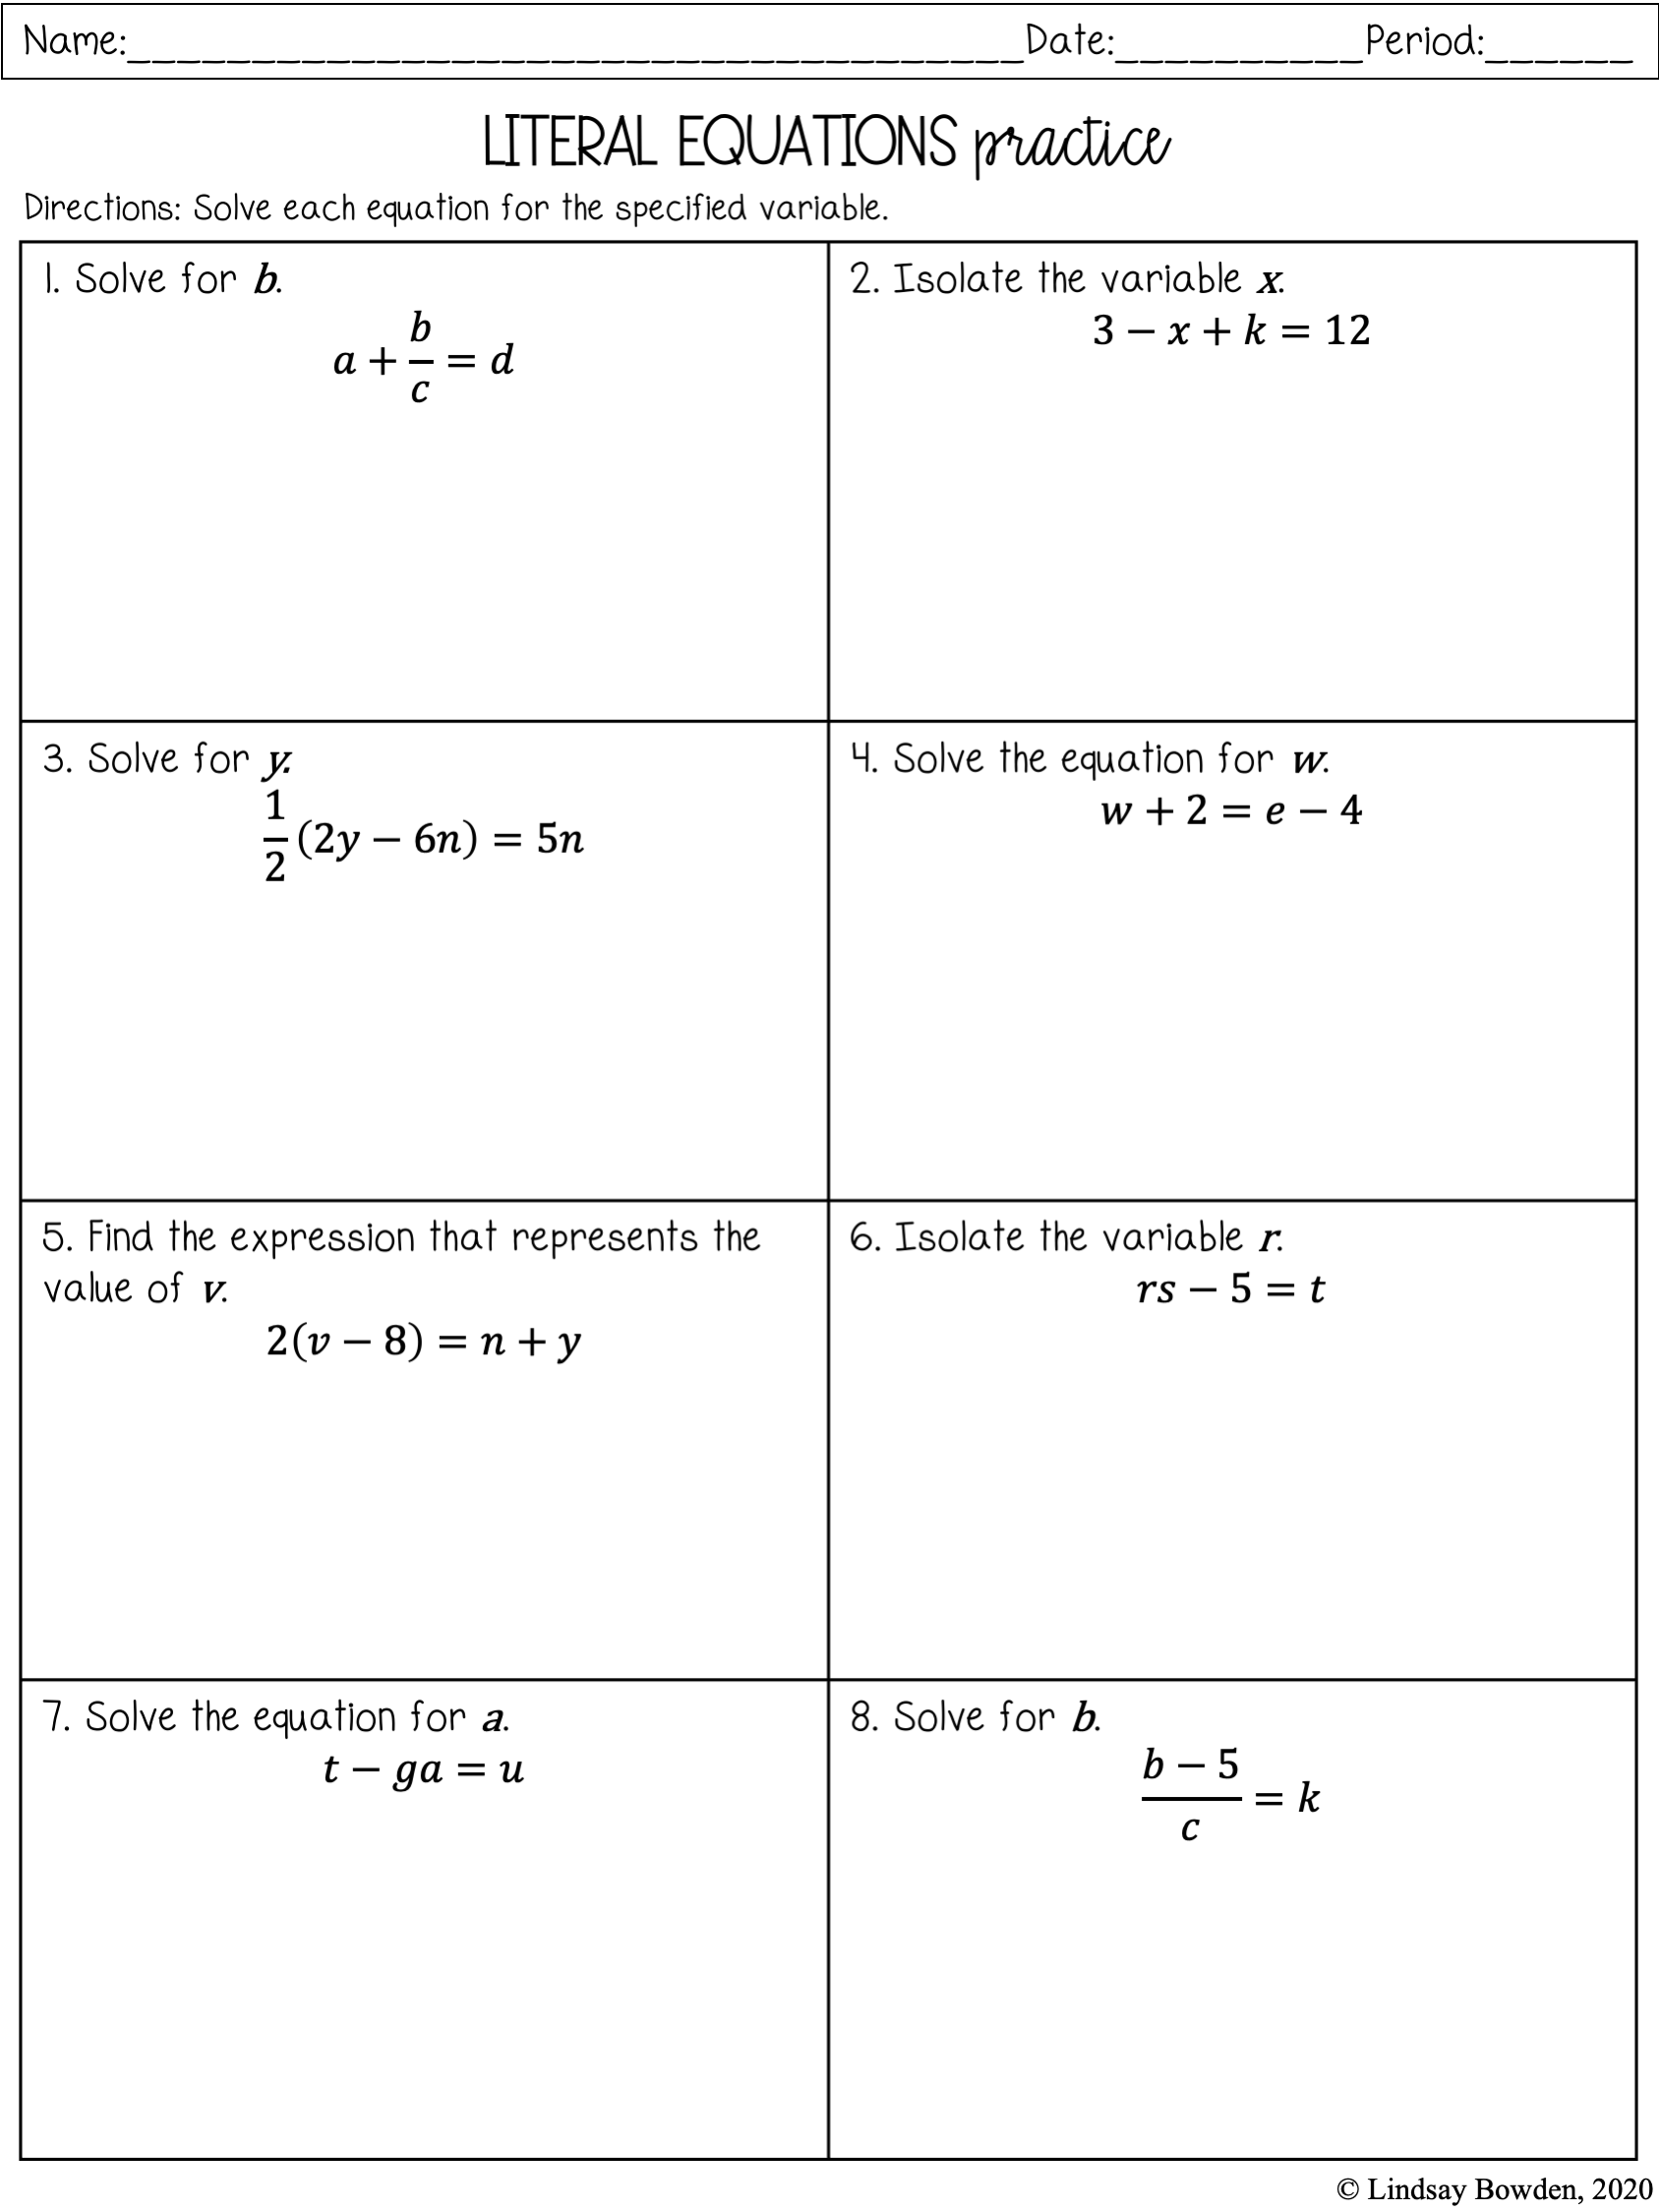 Literal Equations Notes and Worksheets - Lindsay Bowden In Literal Equations Worksheet Answers